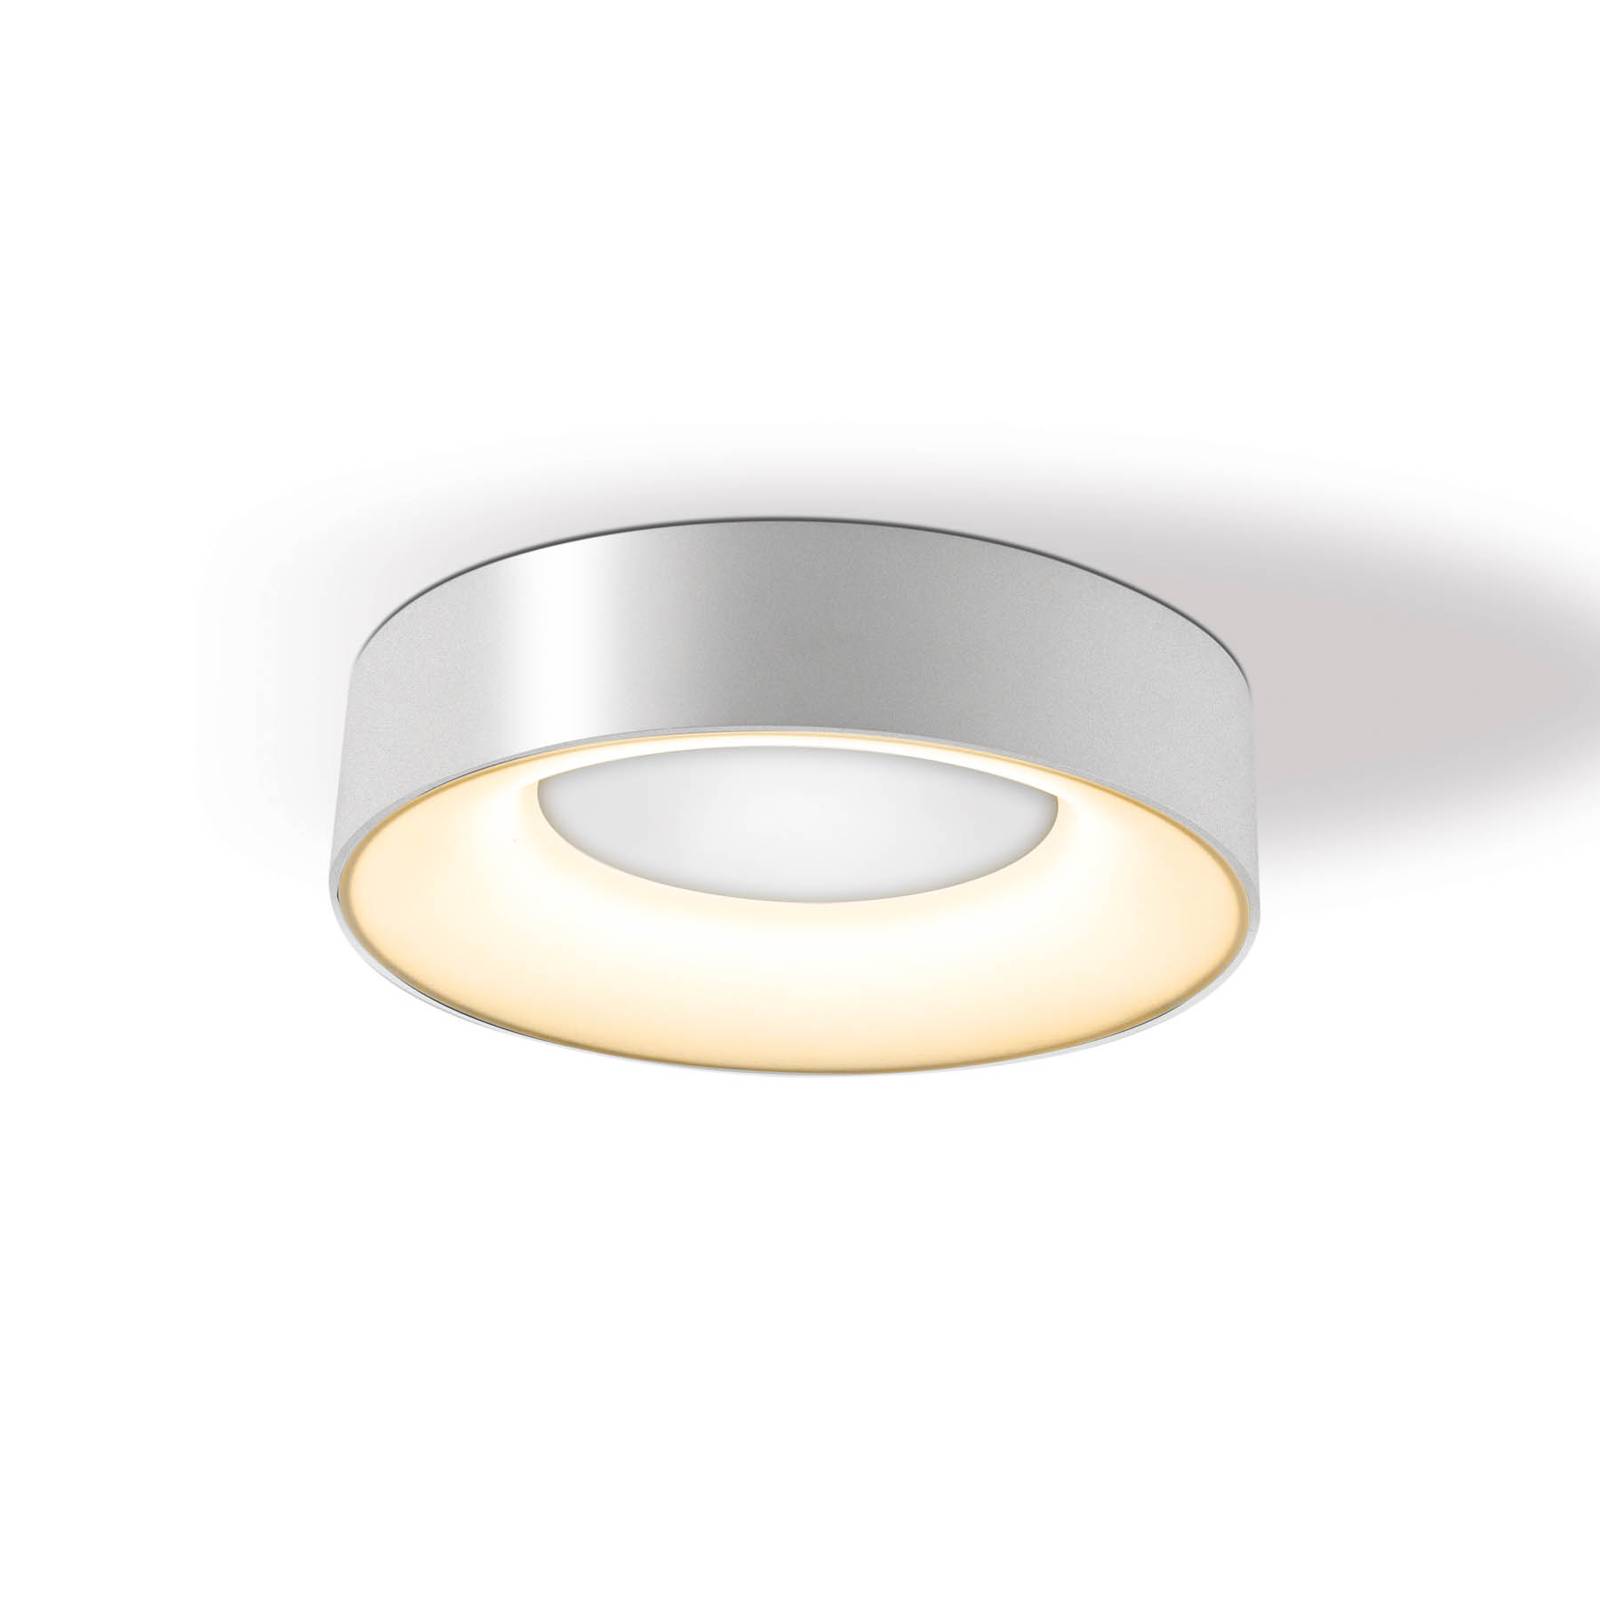 Sauro LED ceiling light, Ø 30 cm, silver